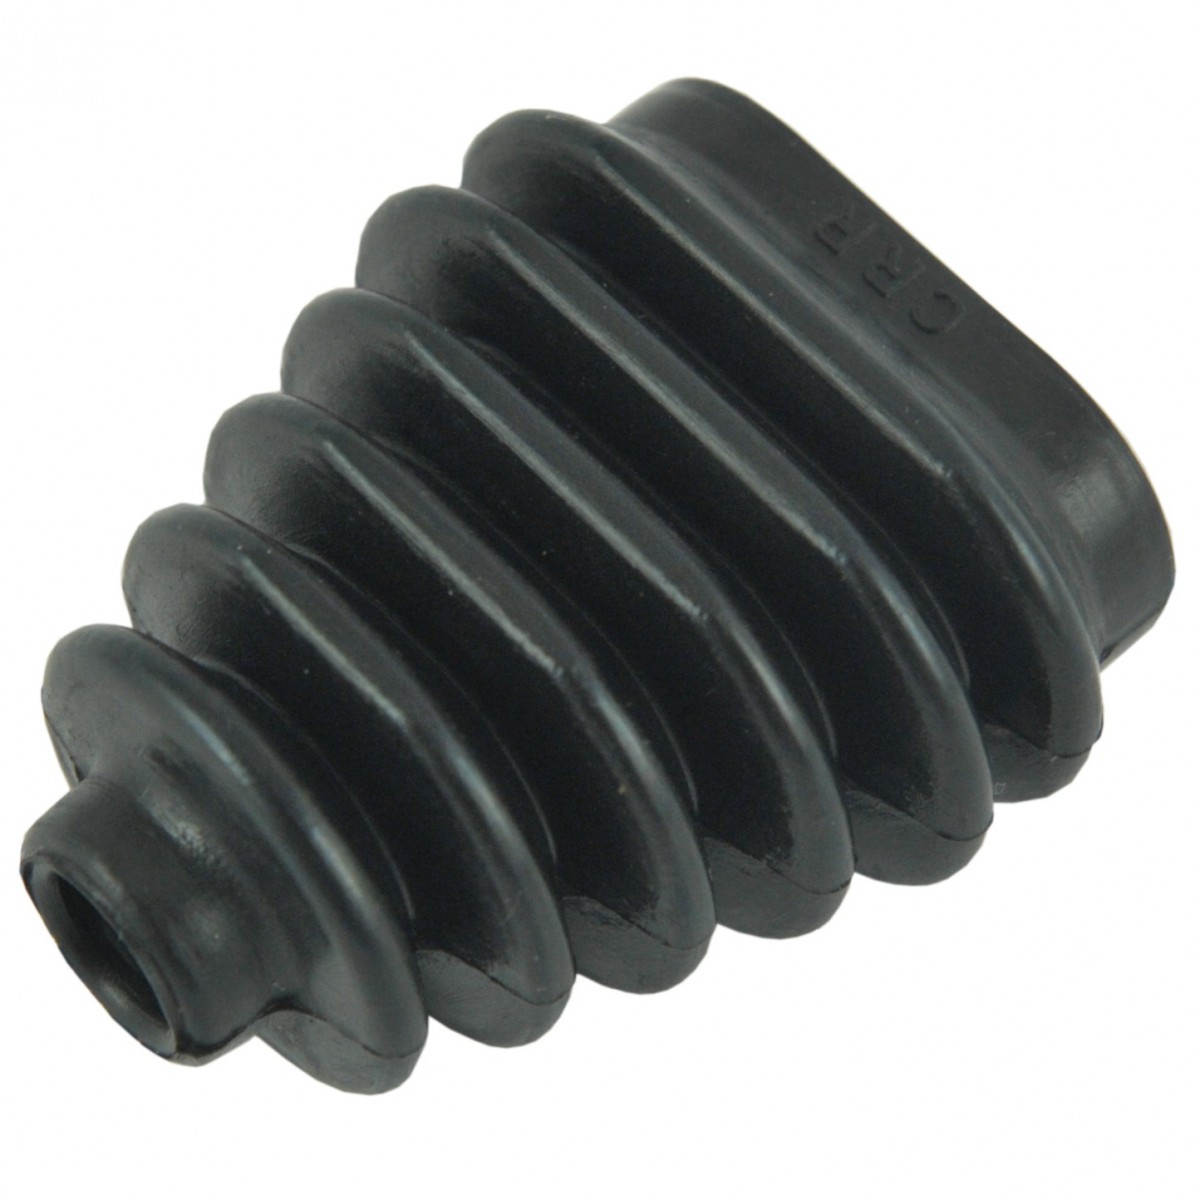 Seal 33 x 55 mm, coil seal, Kubota L5018, L4708 control valve rubber